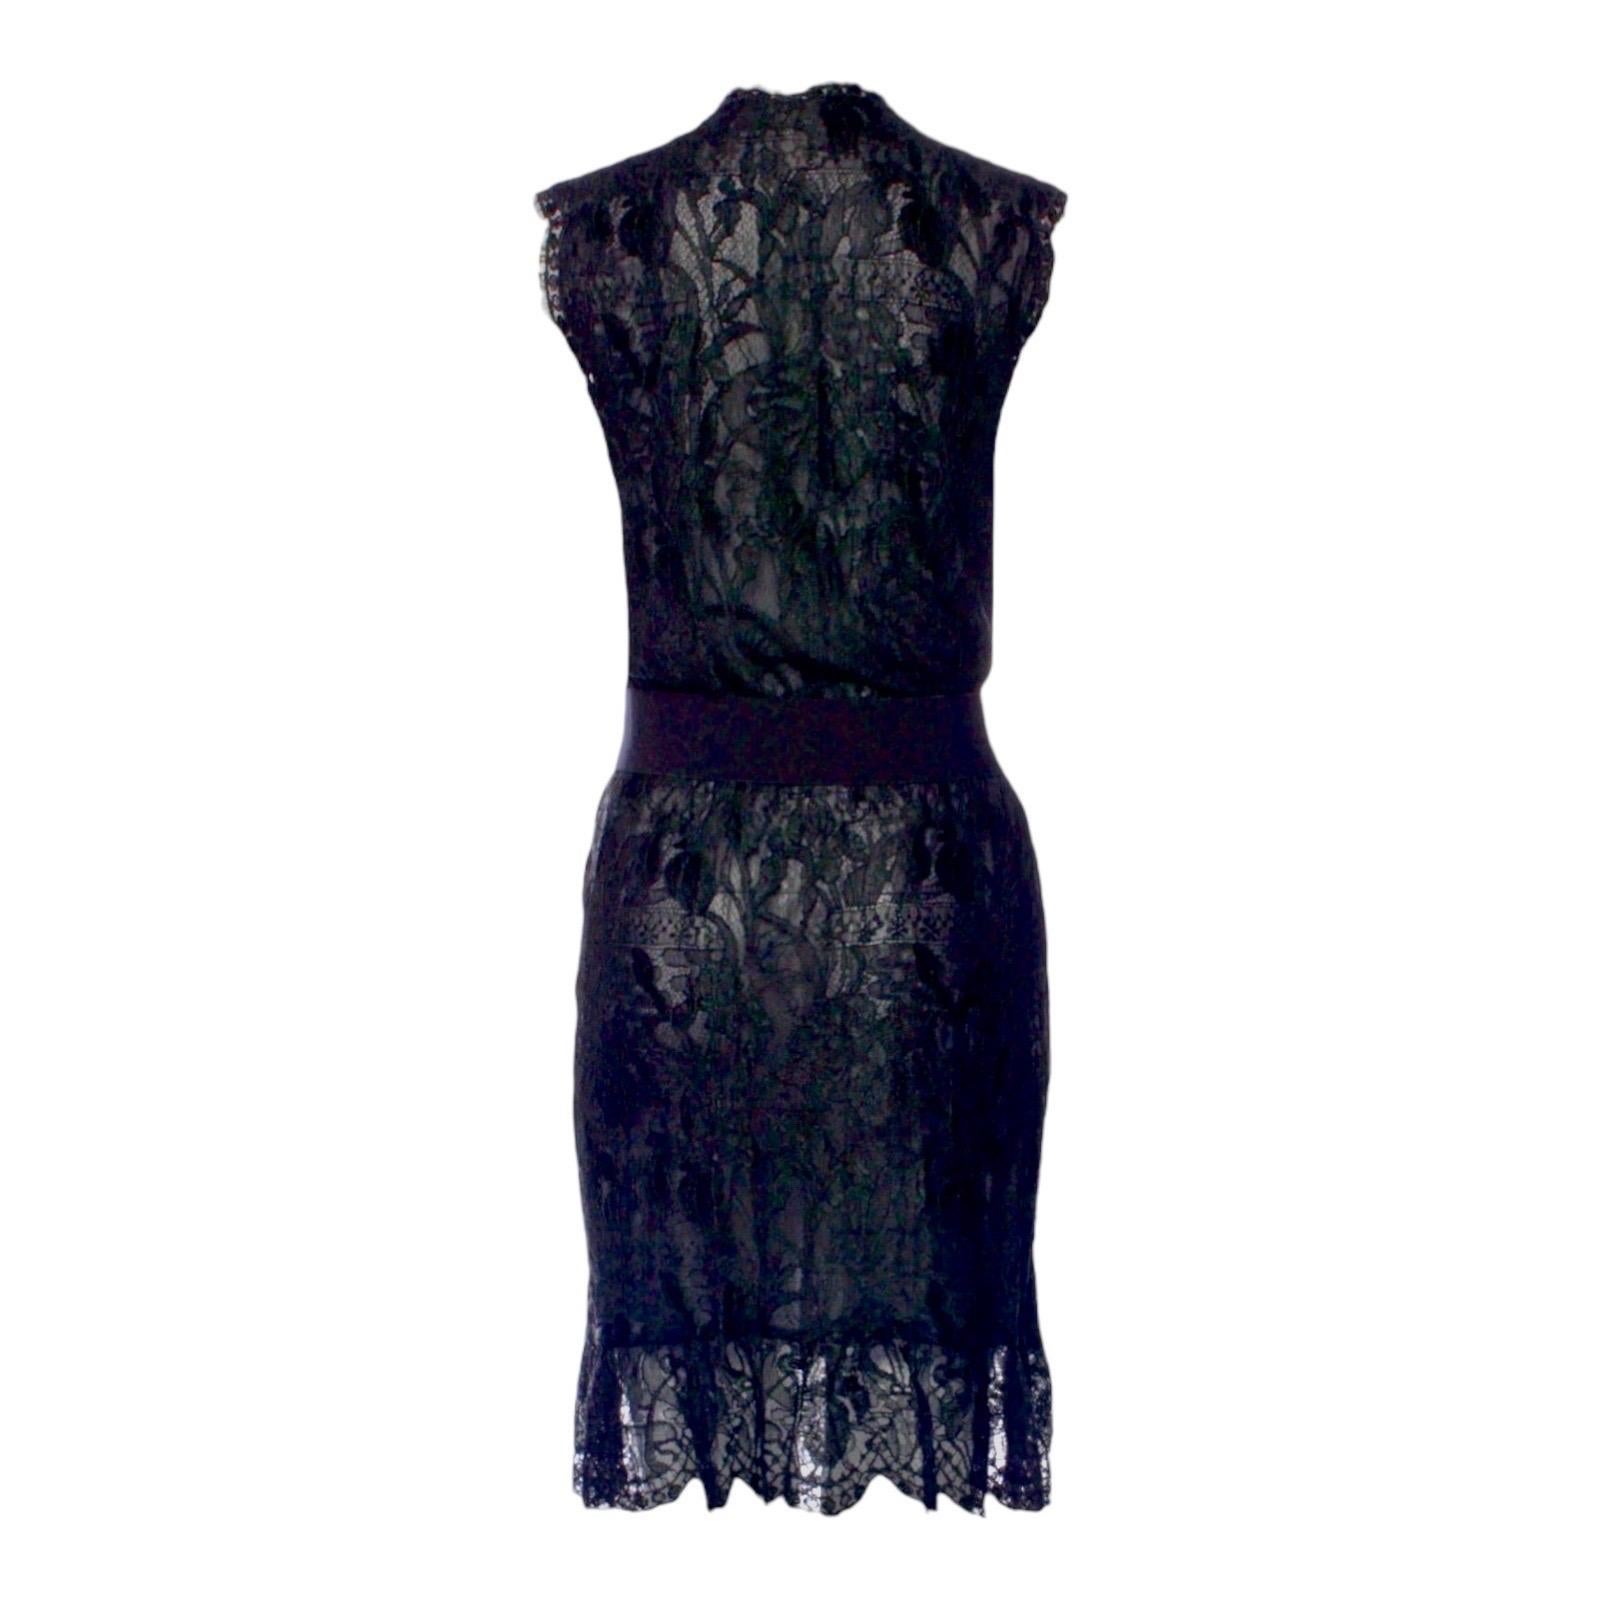 UNWORN Emilio Pucci by Peter Dundas Black Belted Lace Dress Zipper Detail 42 For Sale 1